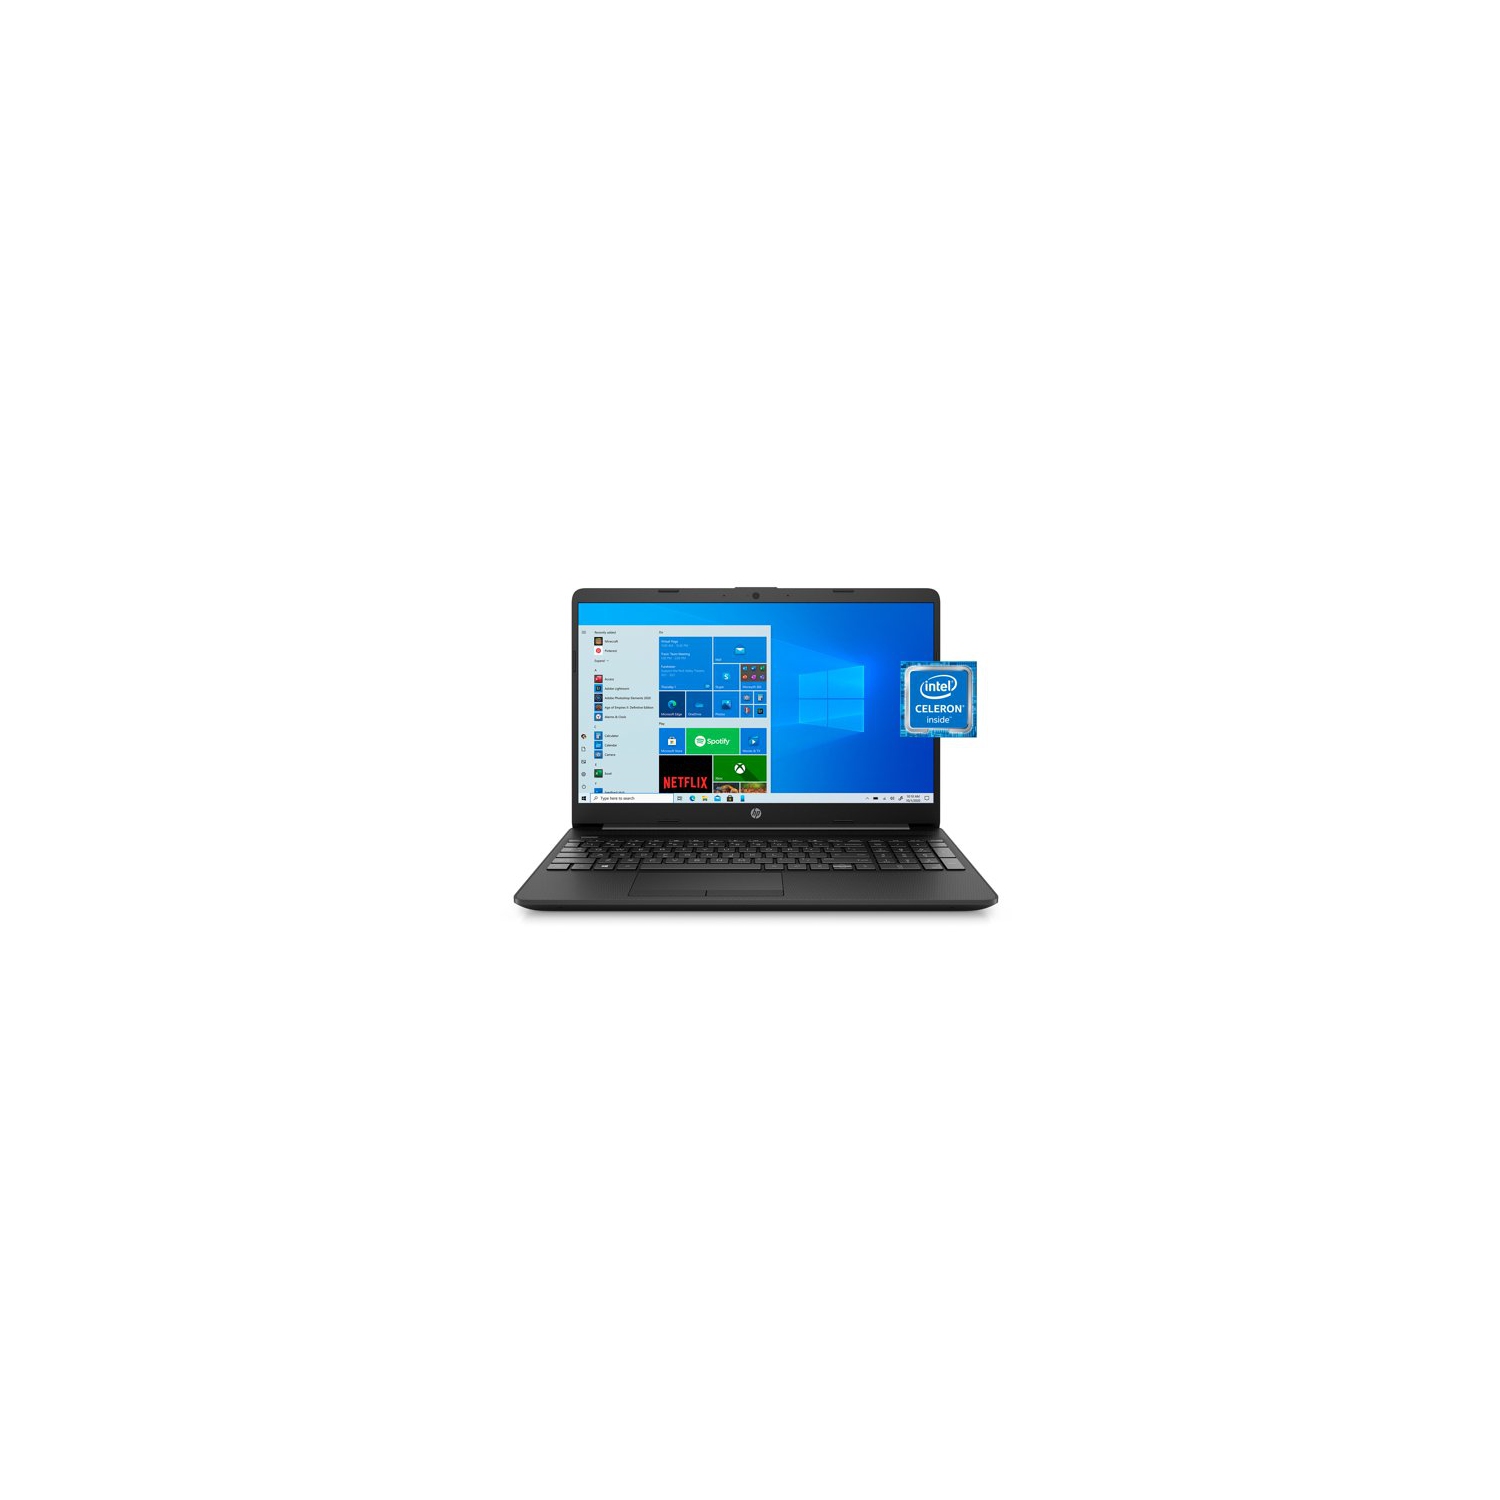 HP 15.6" FHD Laptop (Intel Celeron N4020, 4GB RAM, 128GB SSD, Windows 10 S mode) - Black (15-dw1001wm) - Damaged Retail Box